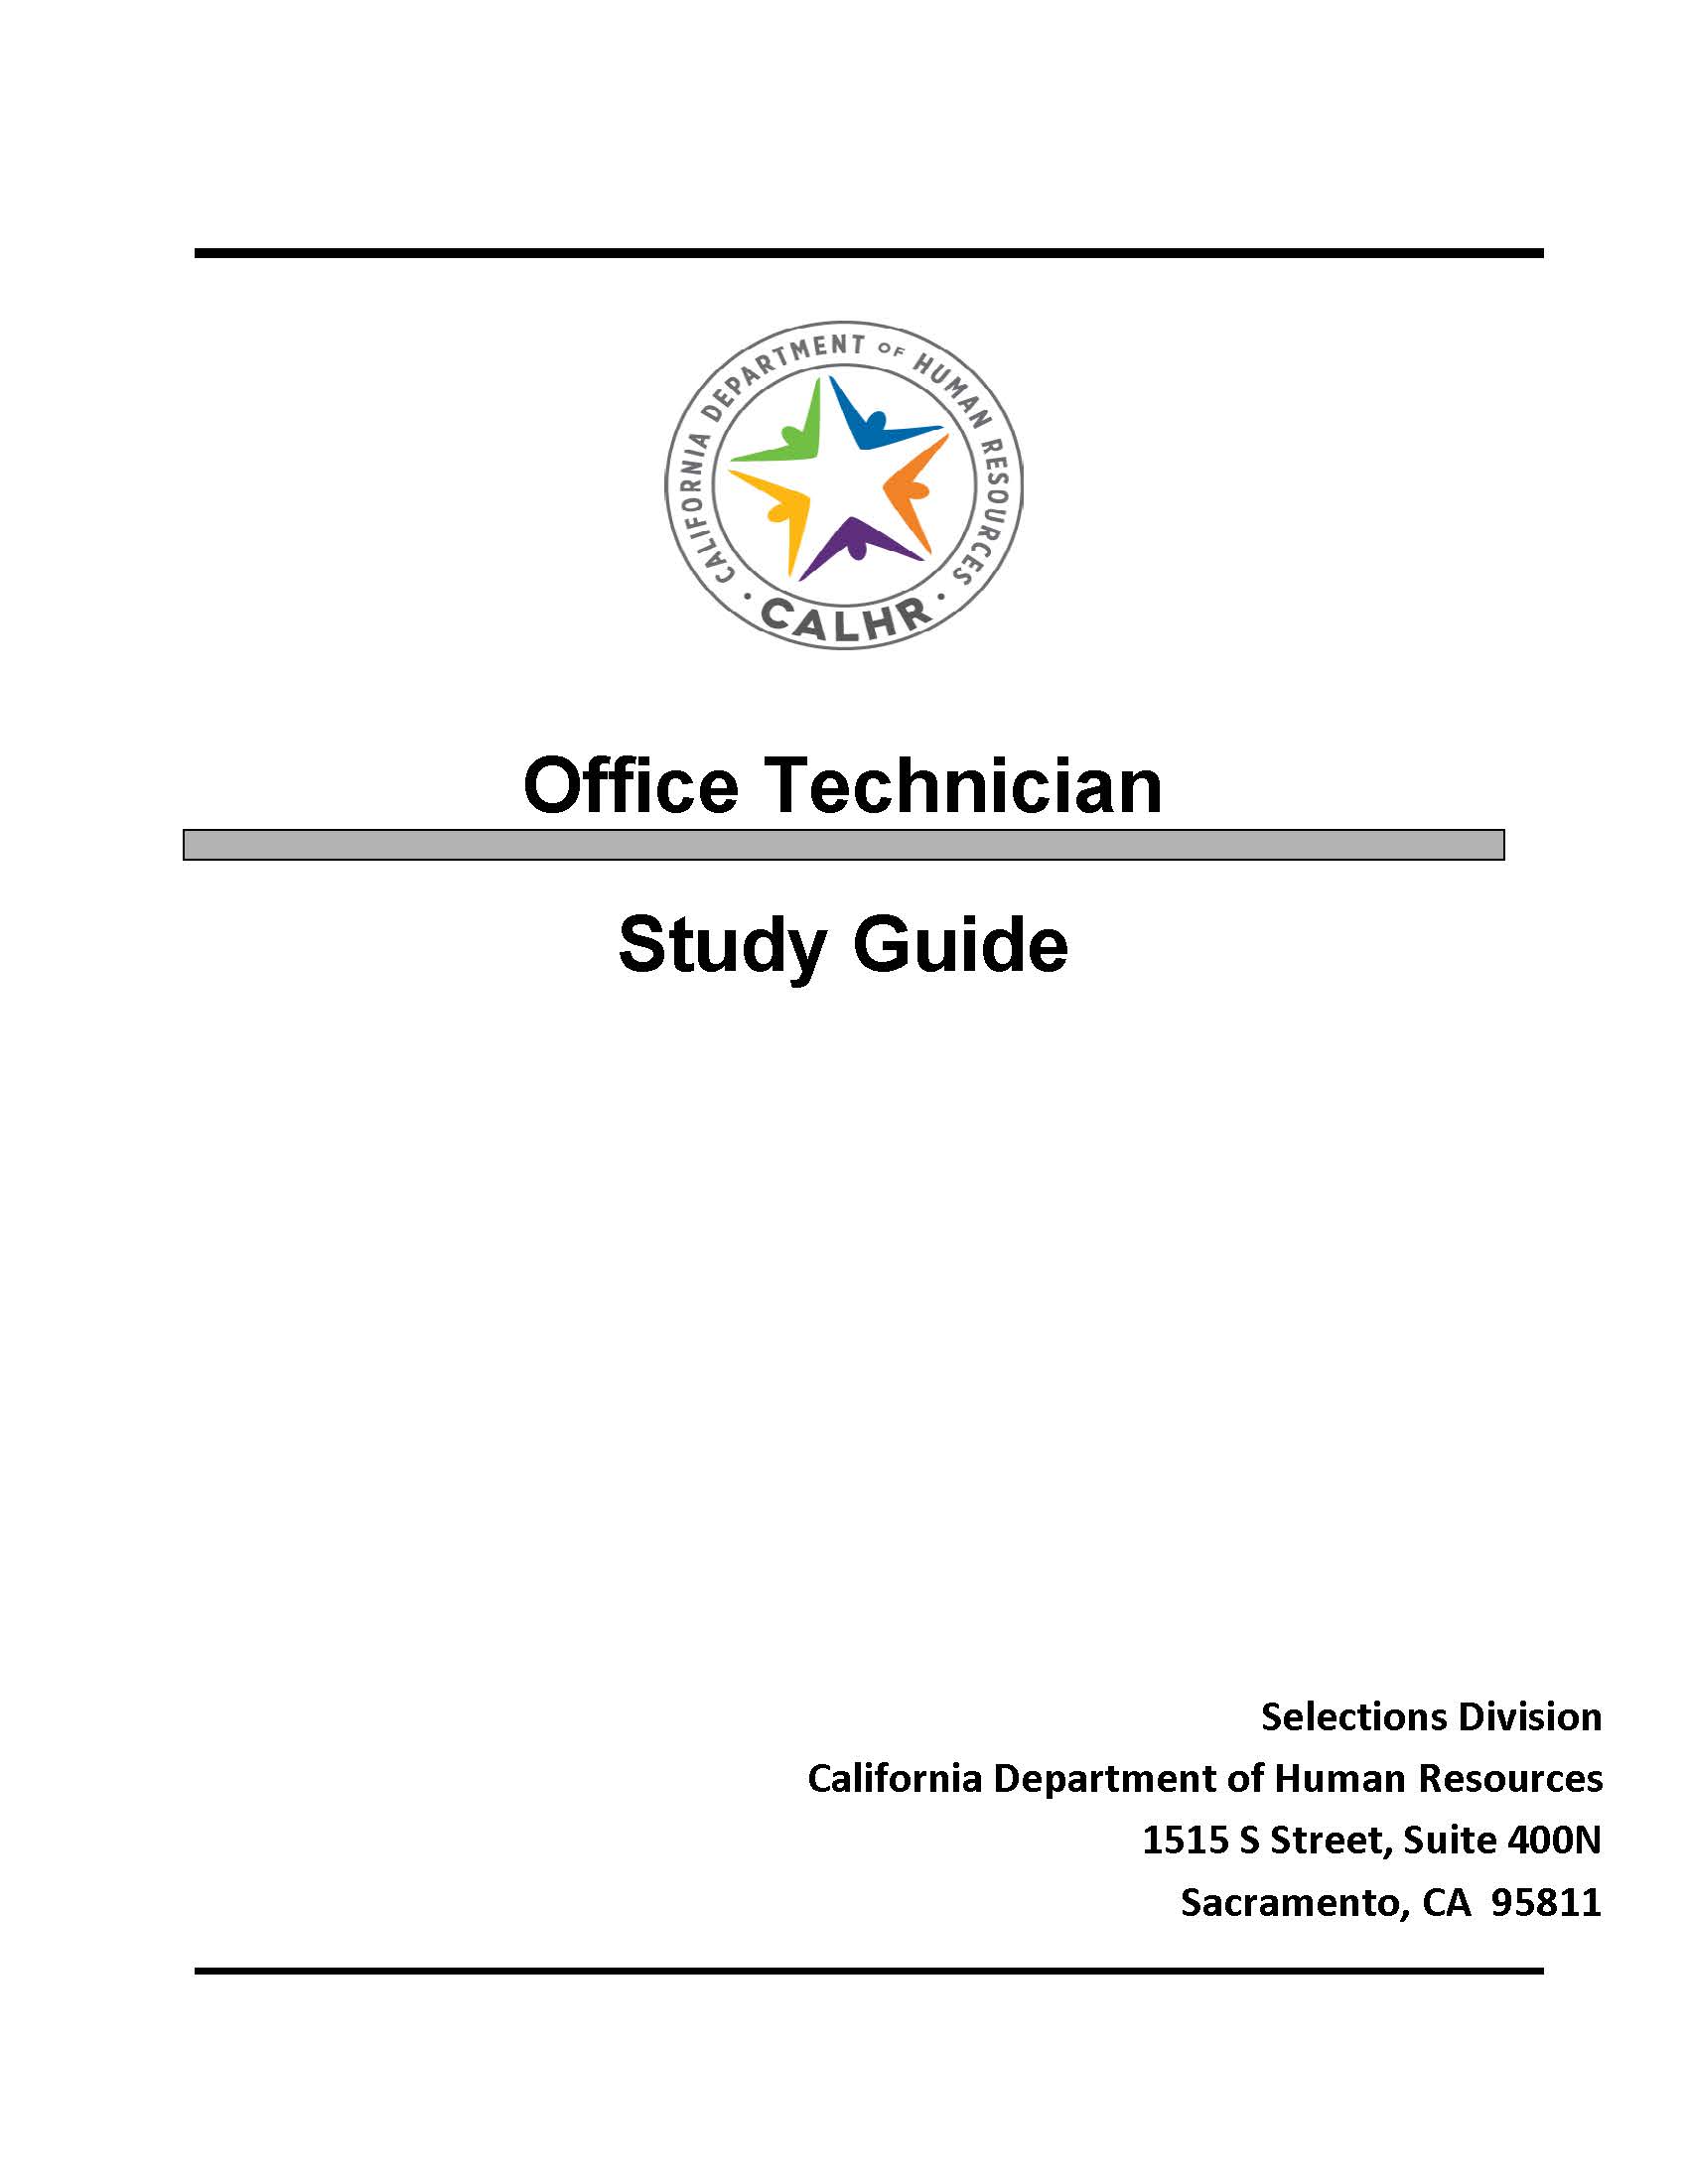 Office Technician Study Guide Thumbnail